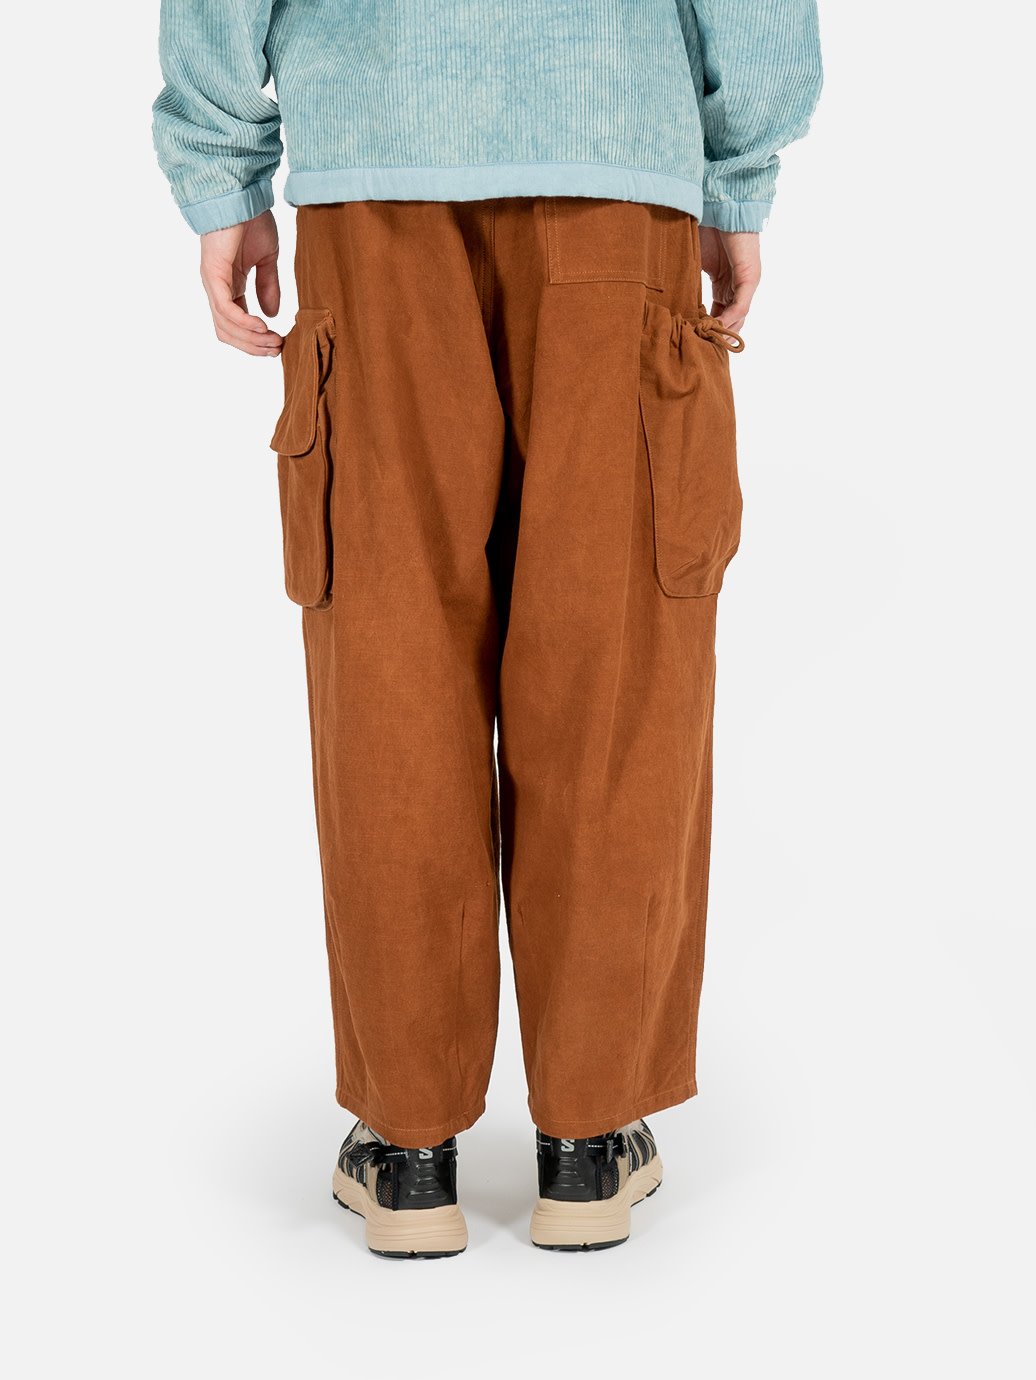 story mfg lush jeans bark brown セール中 - パンツ